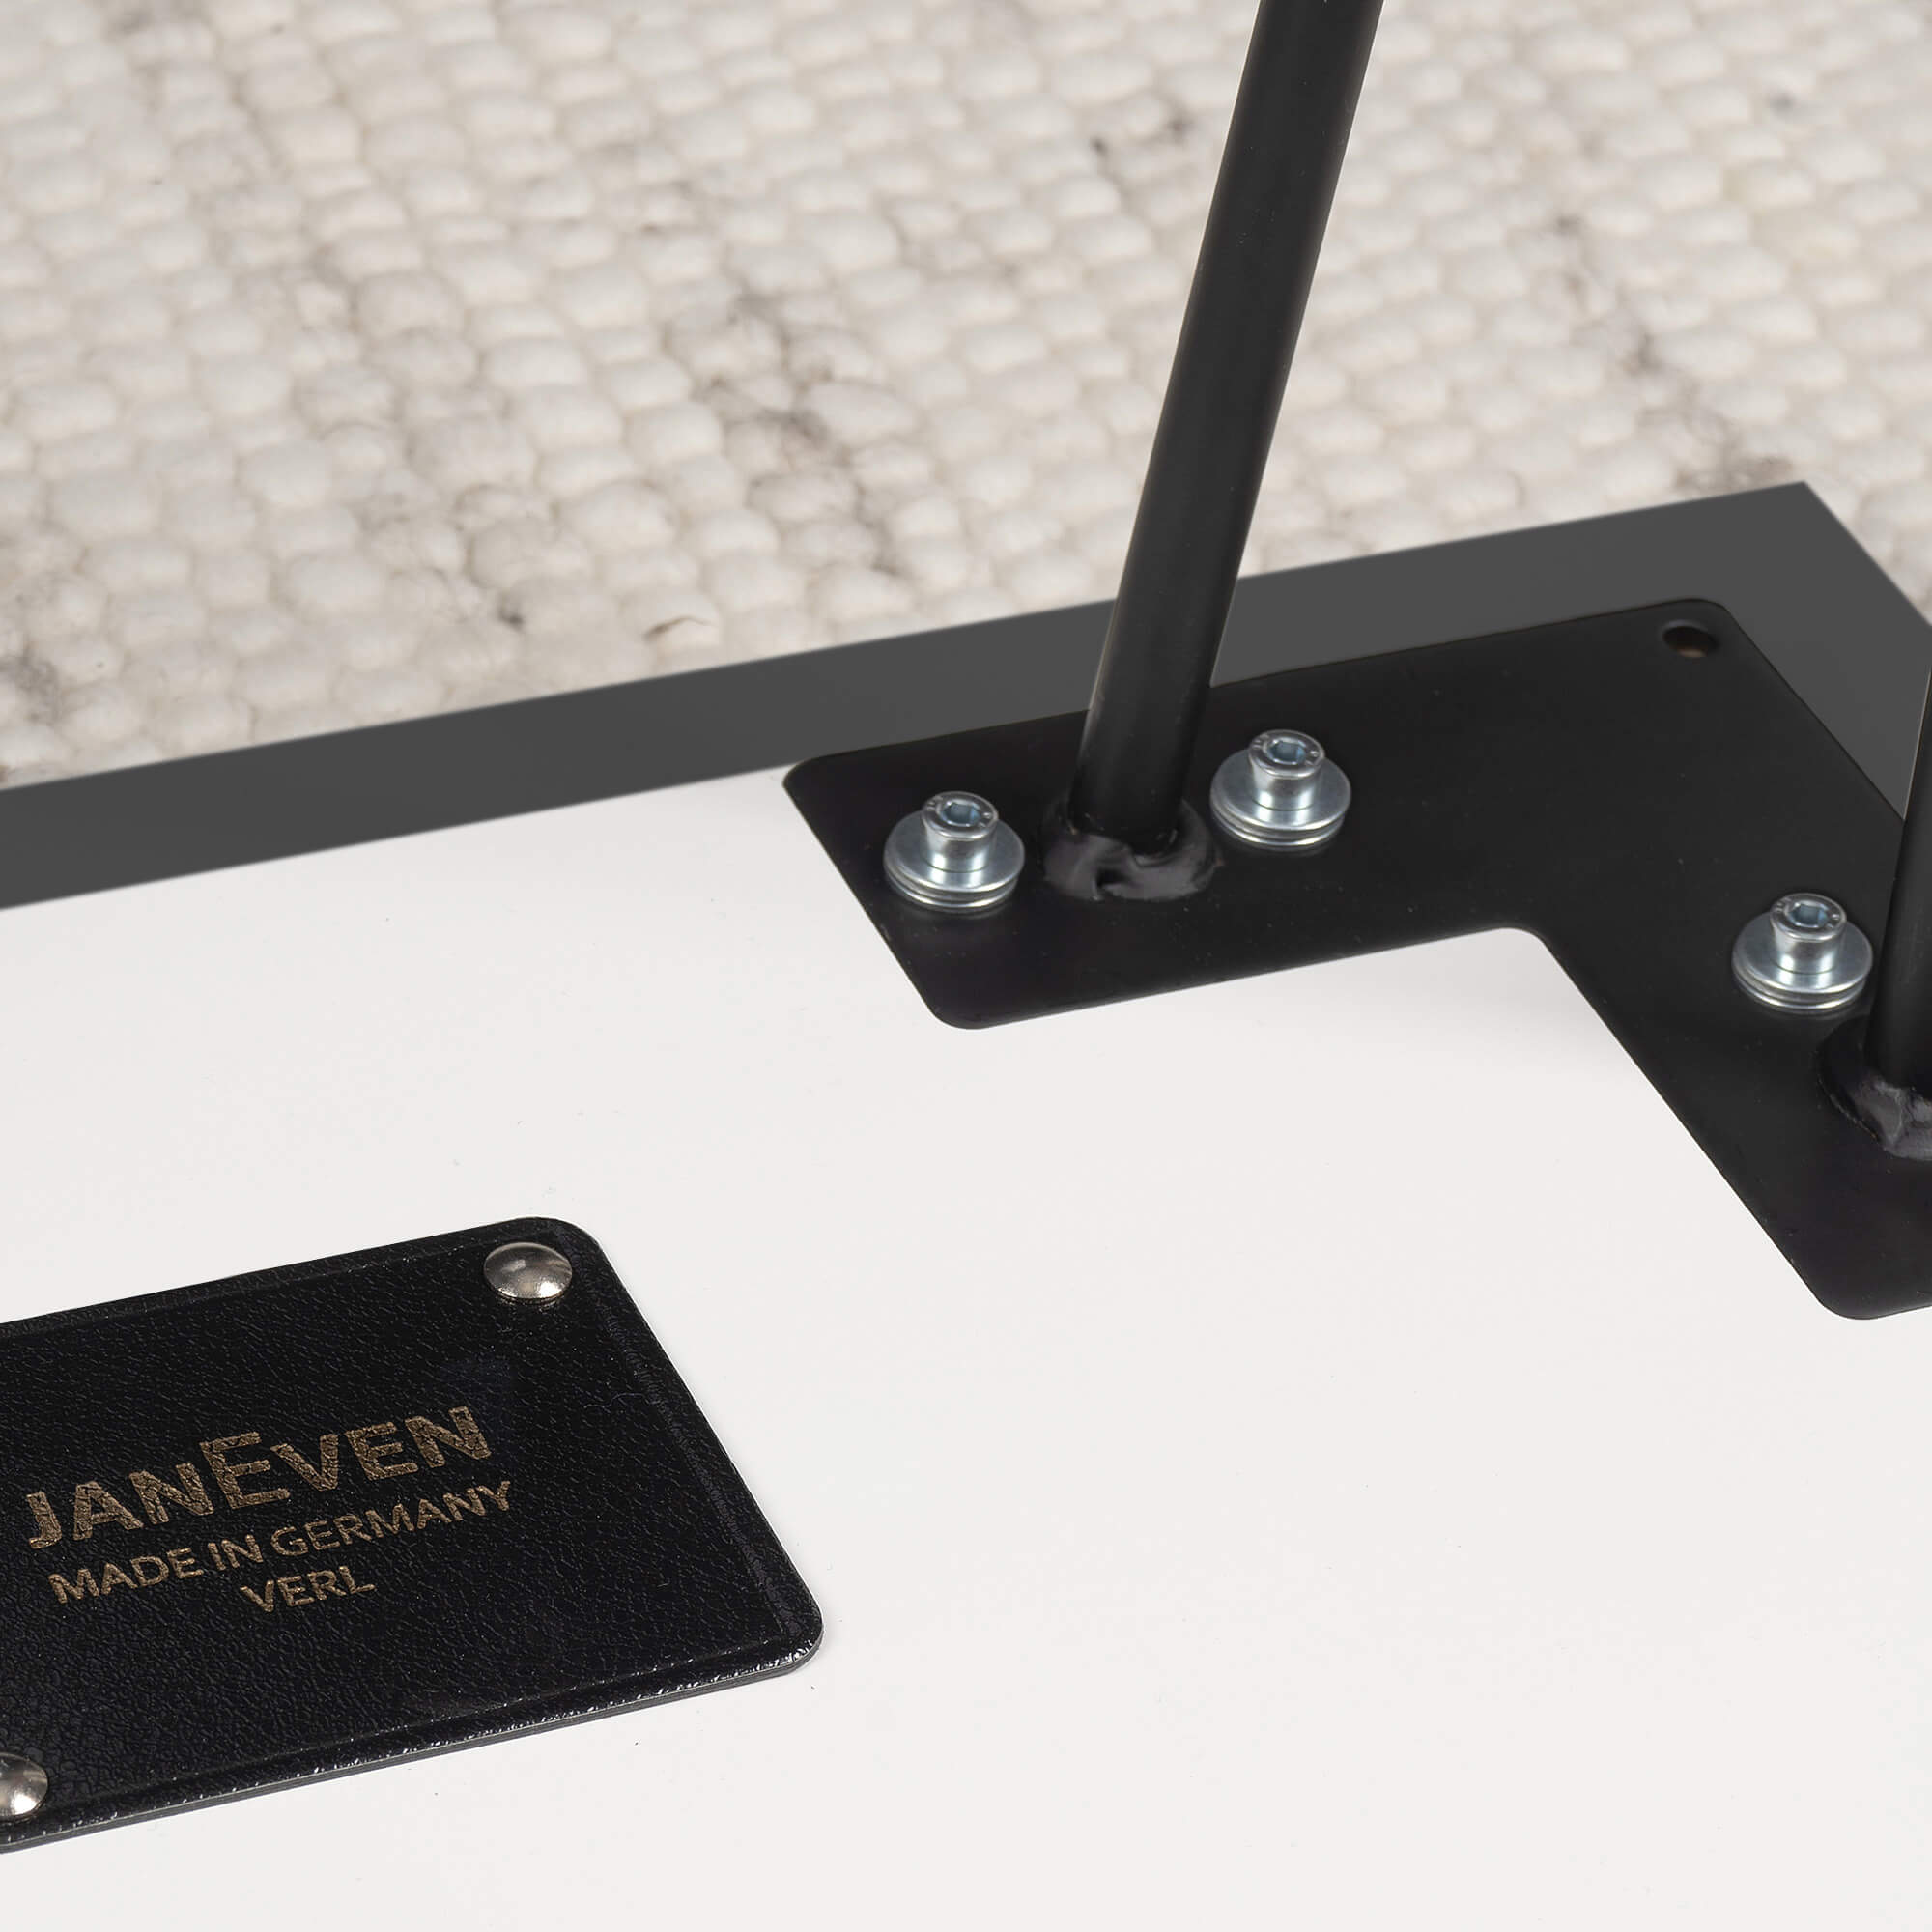 Designer-table-Scandinavian-made-in-Germany-janEven